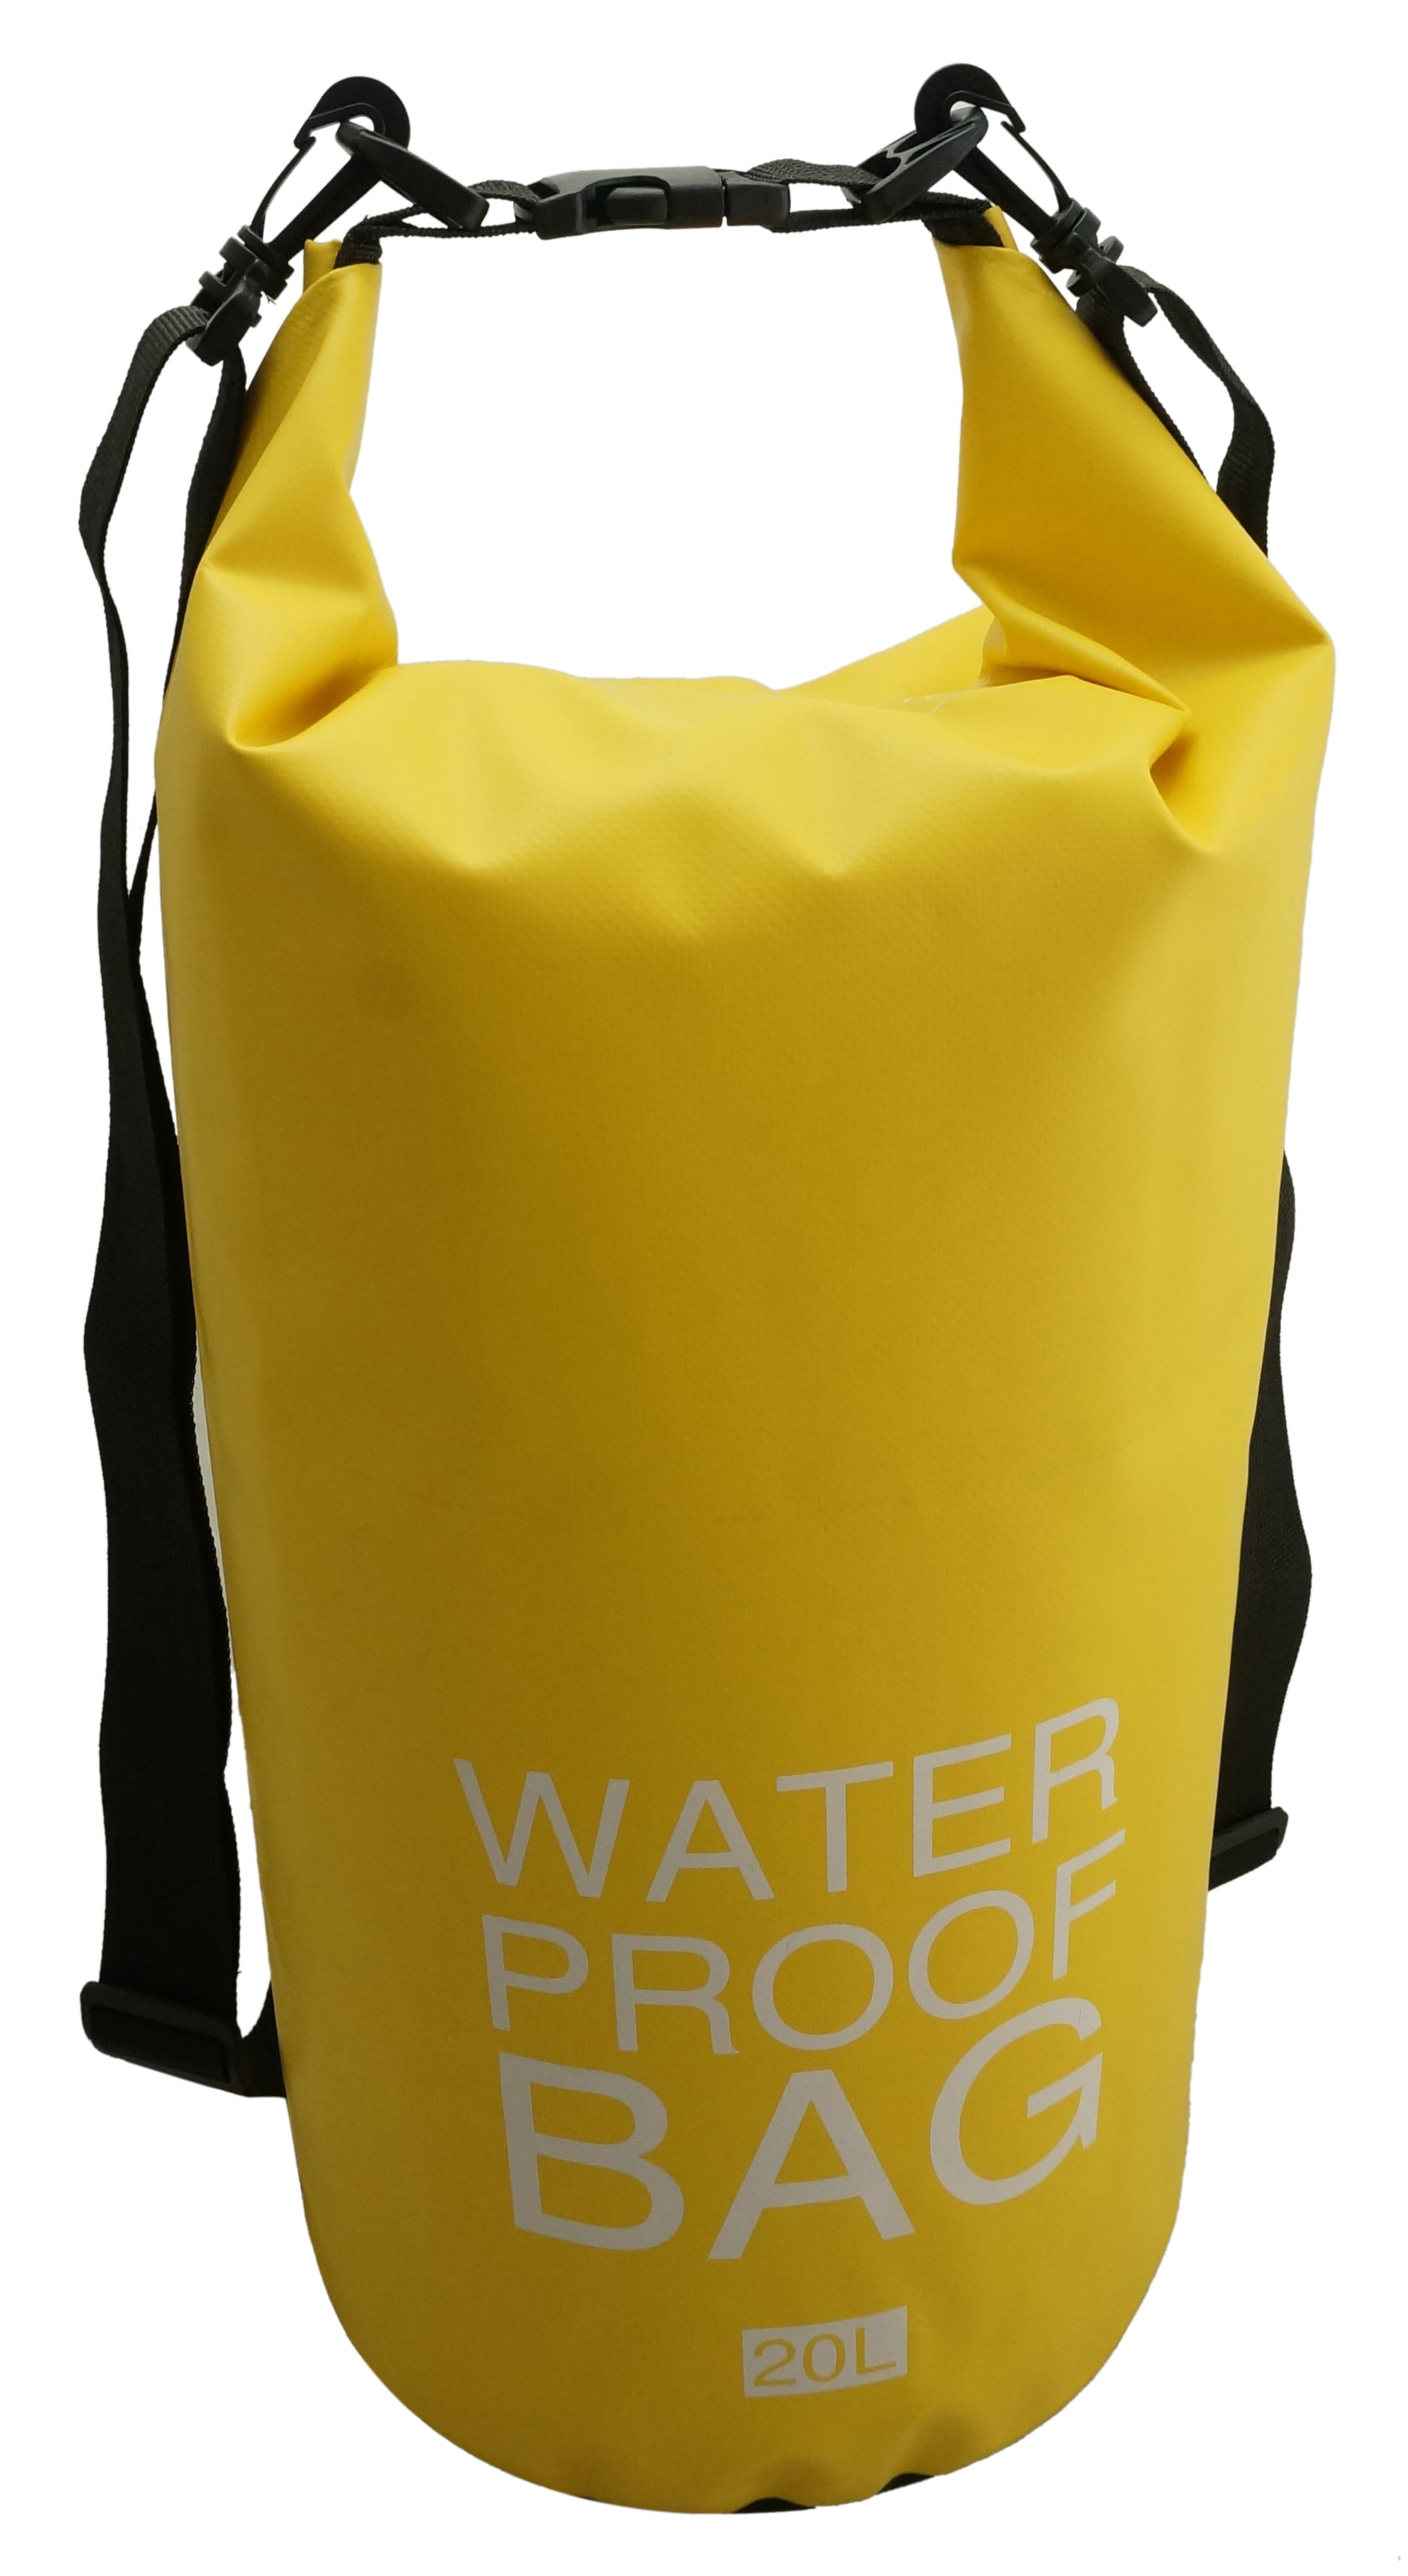 waterproof bag for kayaking